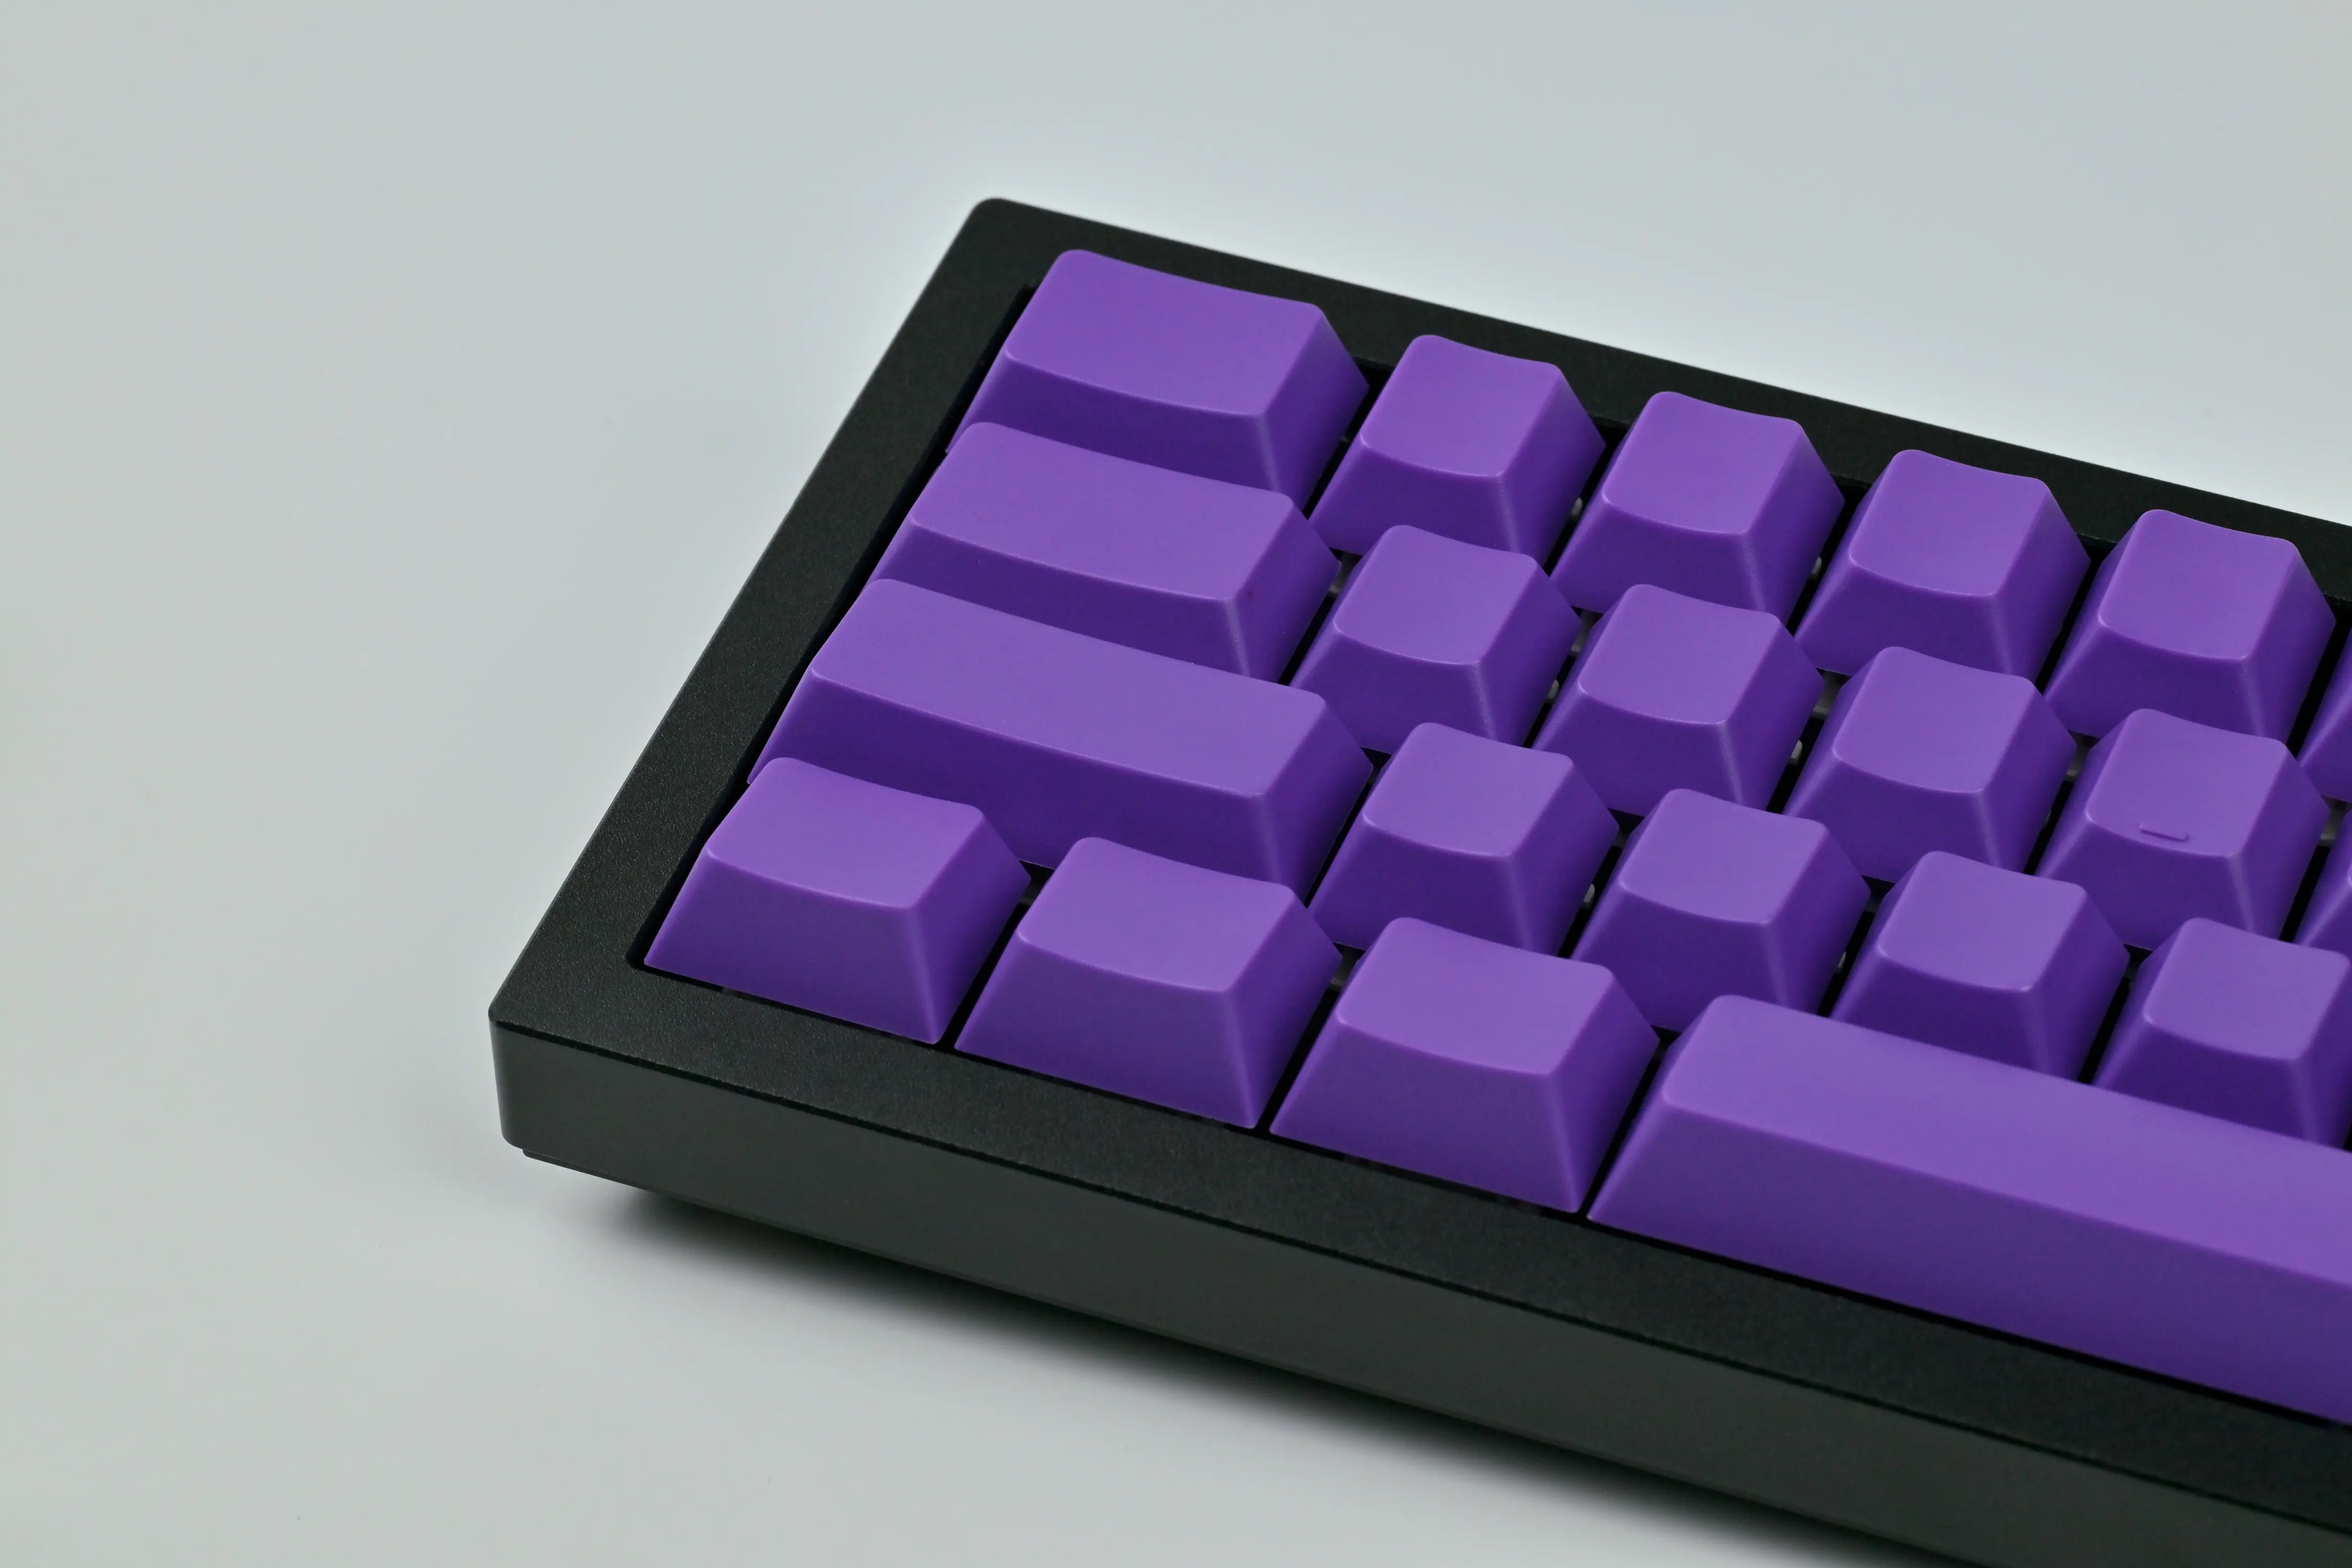 Keyreative ABS Cherry Profile Purple Blank Keycaps